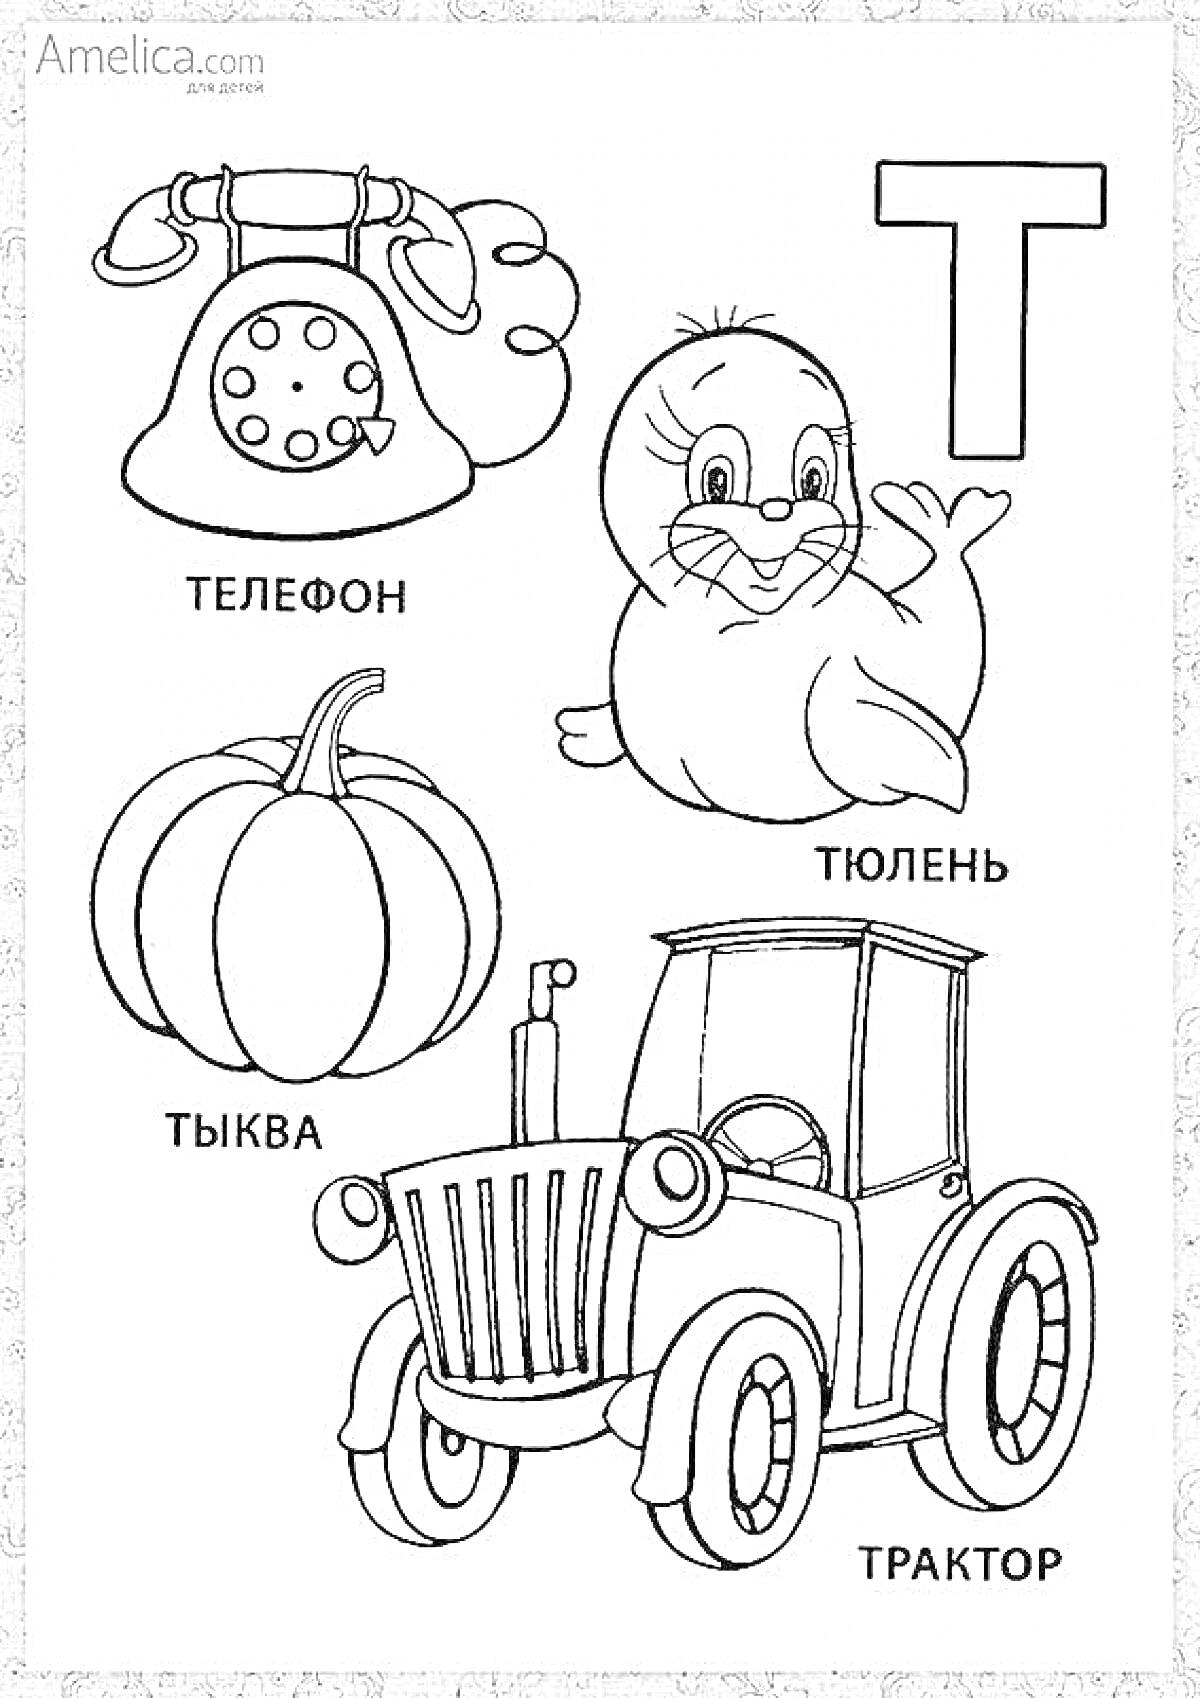 На раскраске изображено: Телефон, Тюлень, Тыква, Трактор, Буква Т